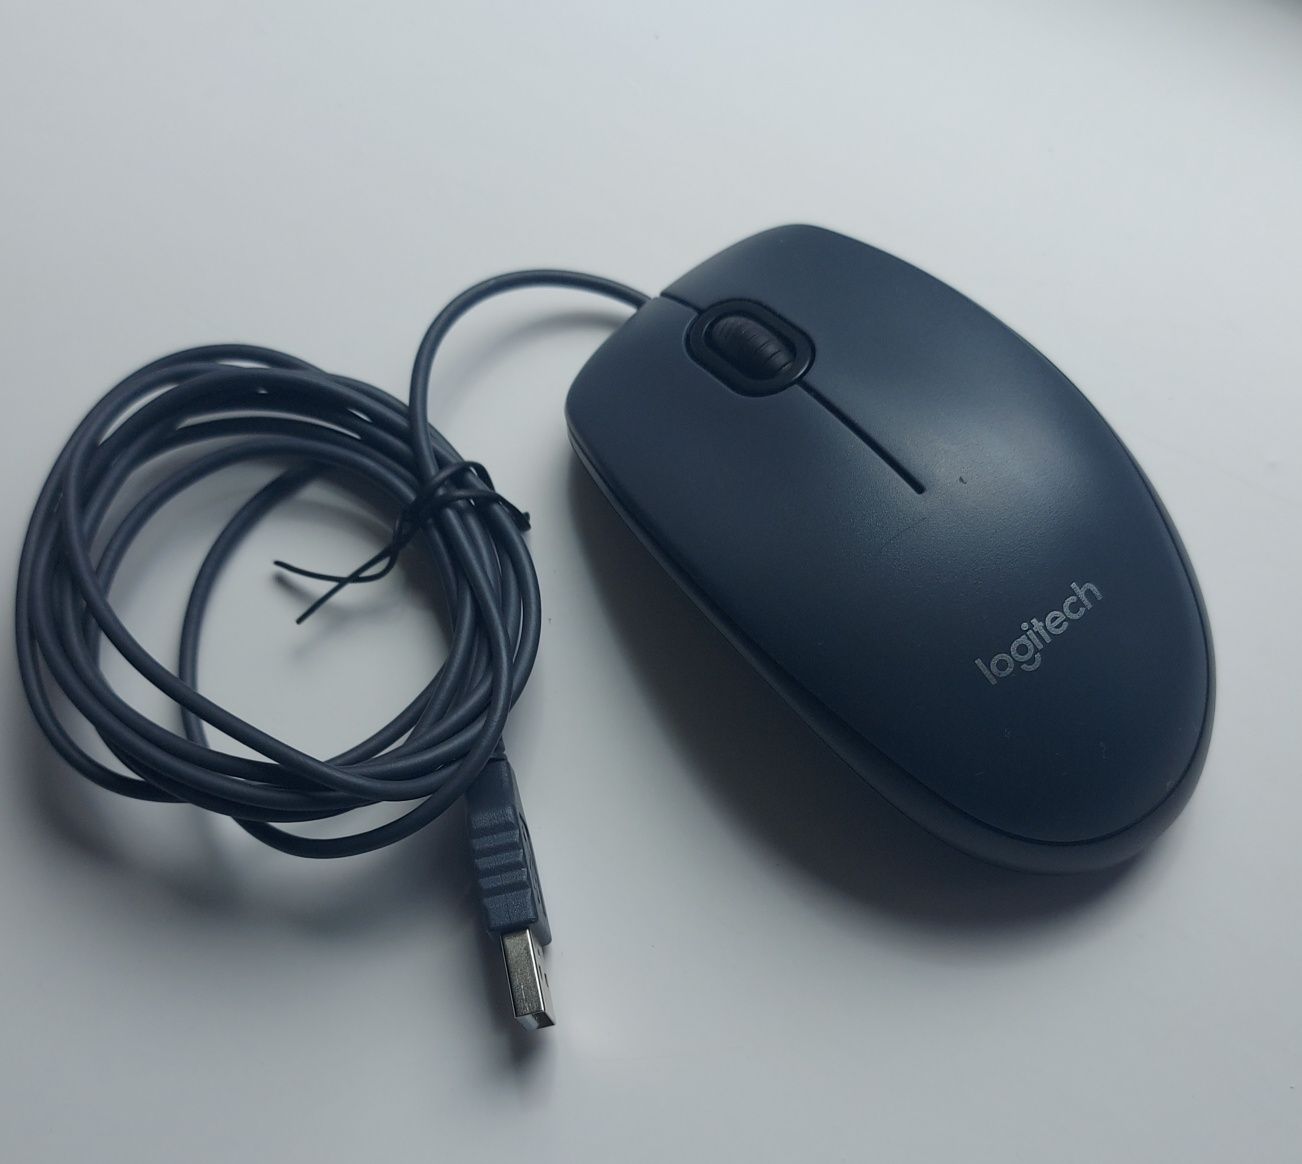 Райзера  v006 Комплект, мышка для ПК Logitech